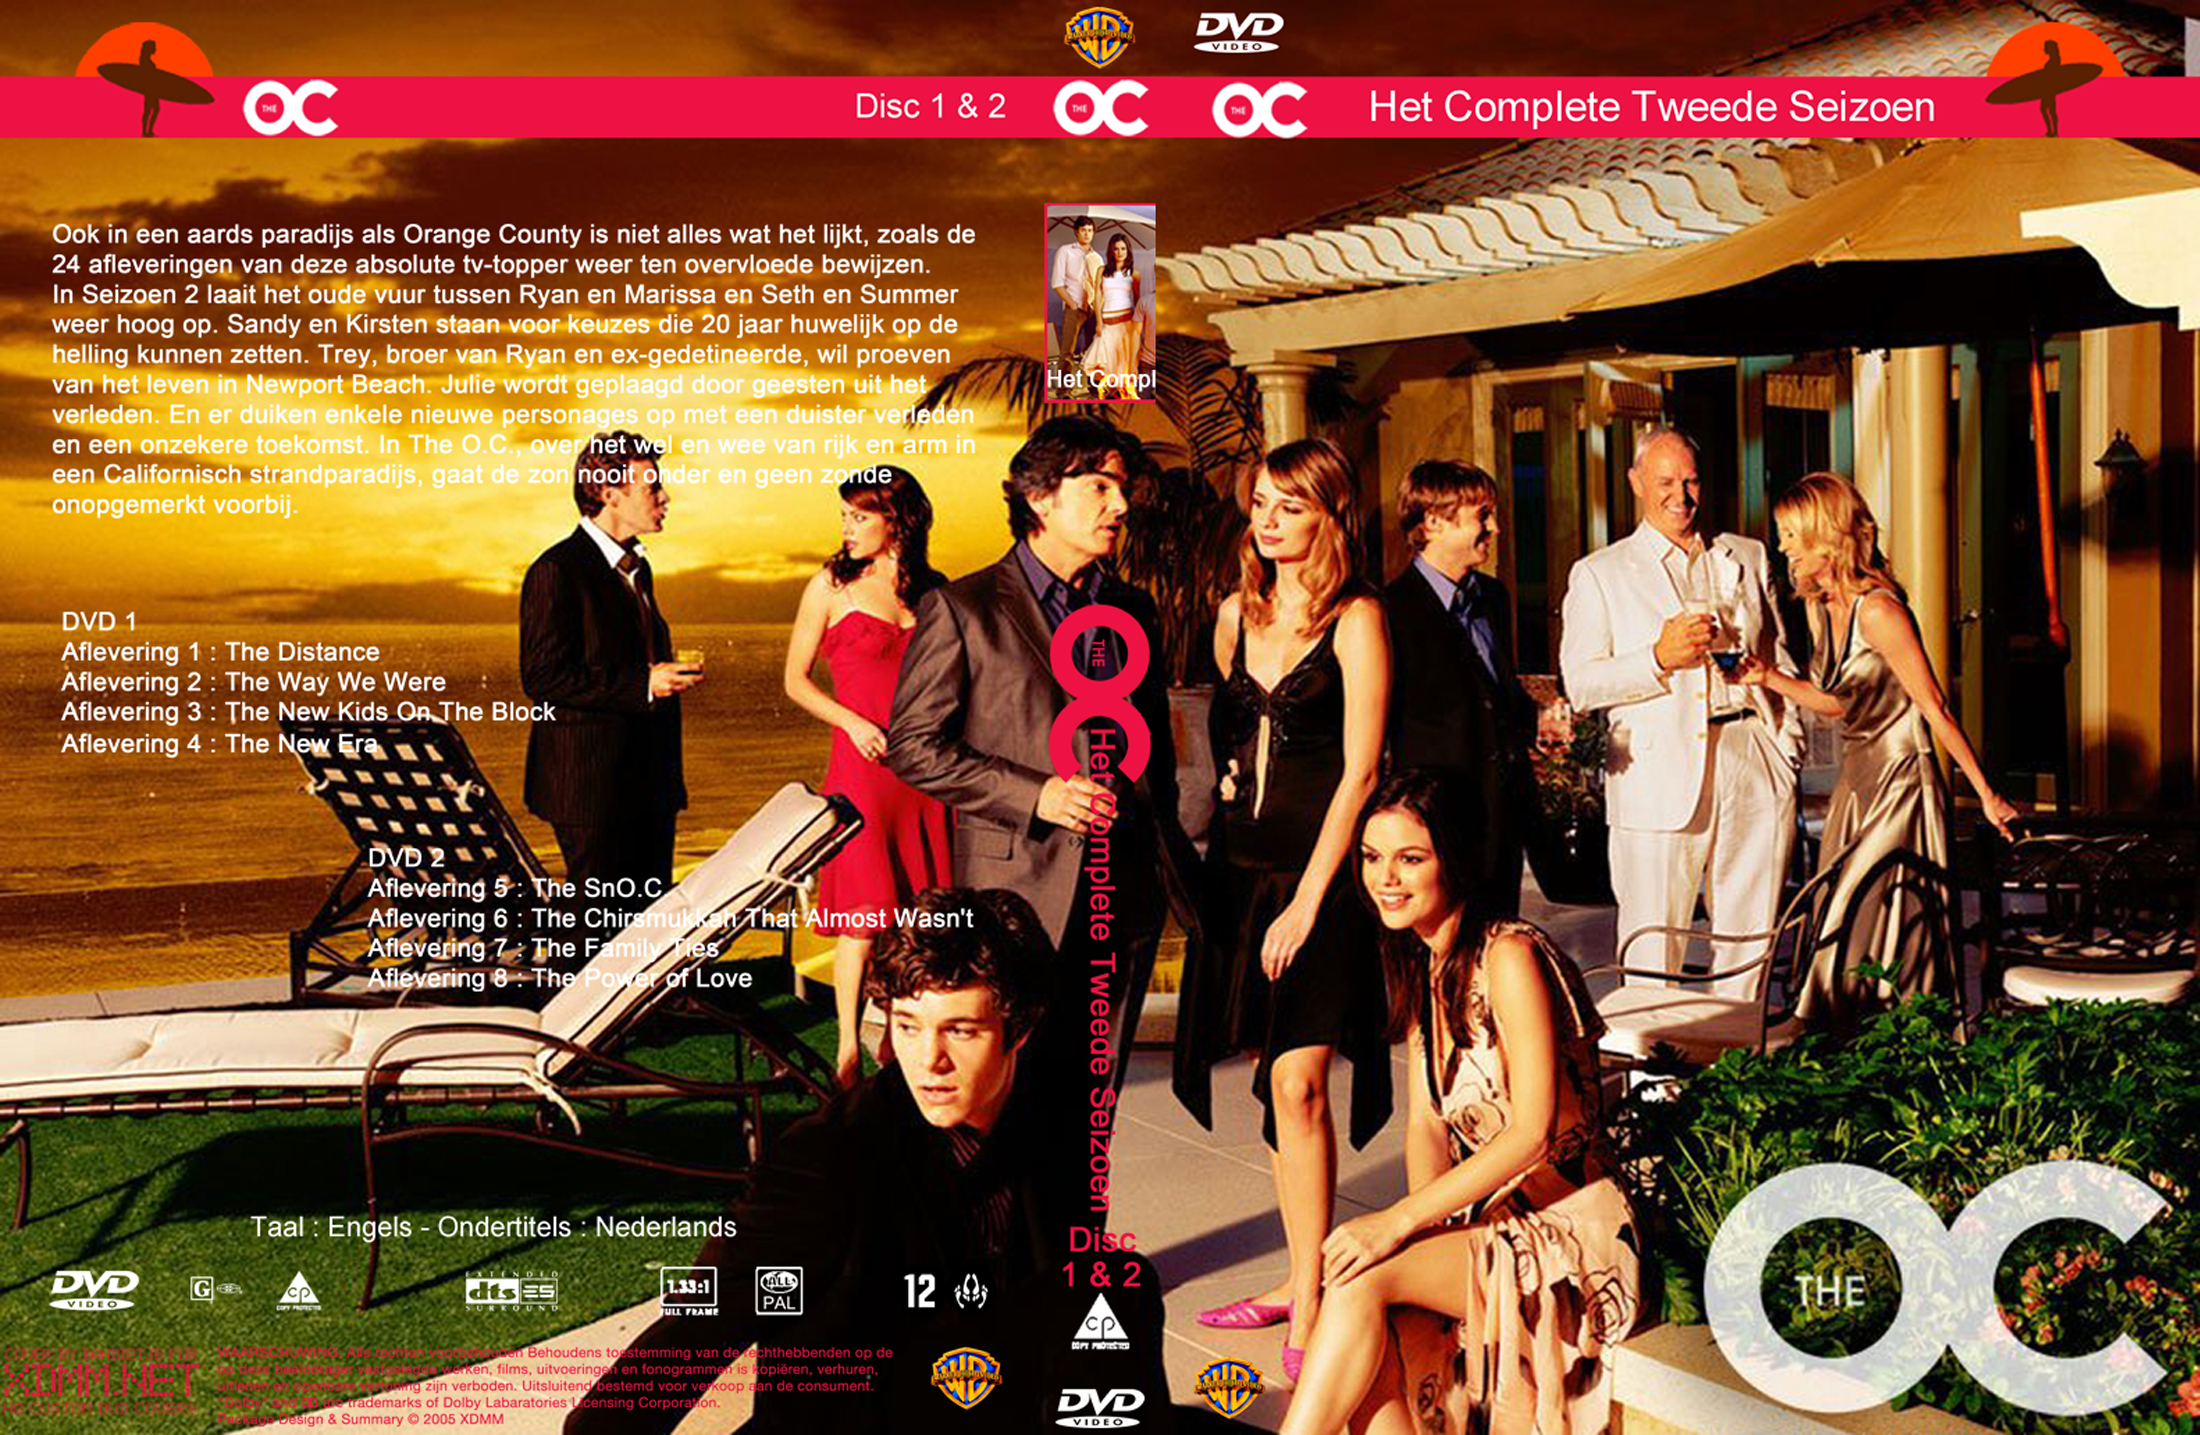 The OC seizoen 2 dvd 1-2